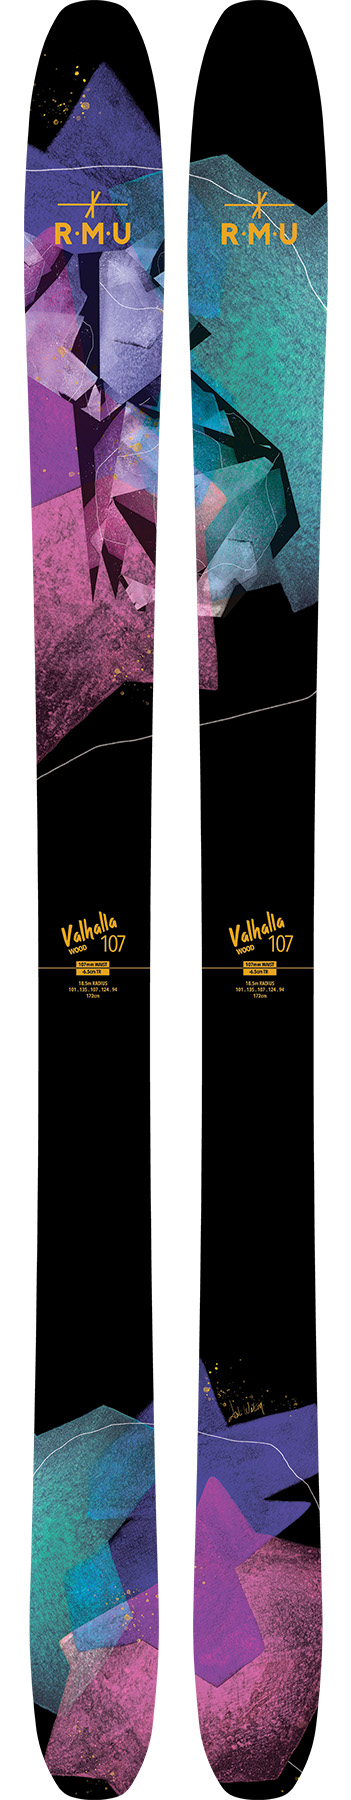 Kristin Sinnott & Sascha Anastas review the RMU Valhalla 107 for Blister